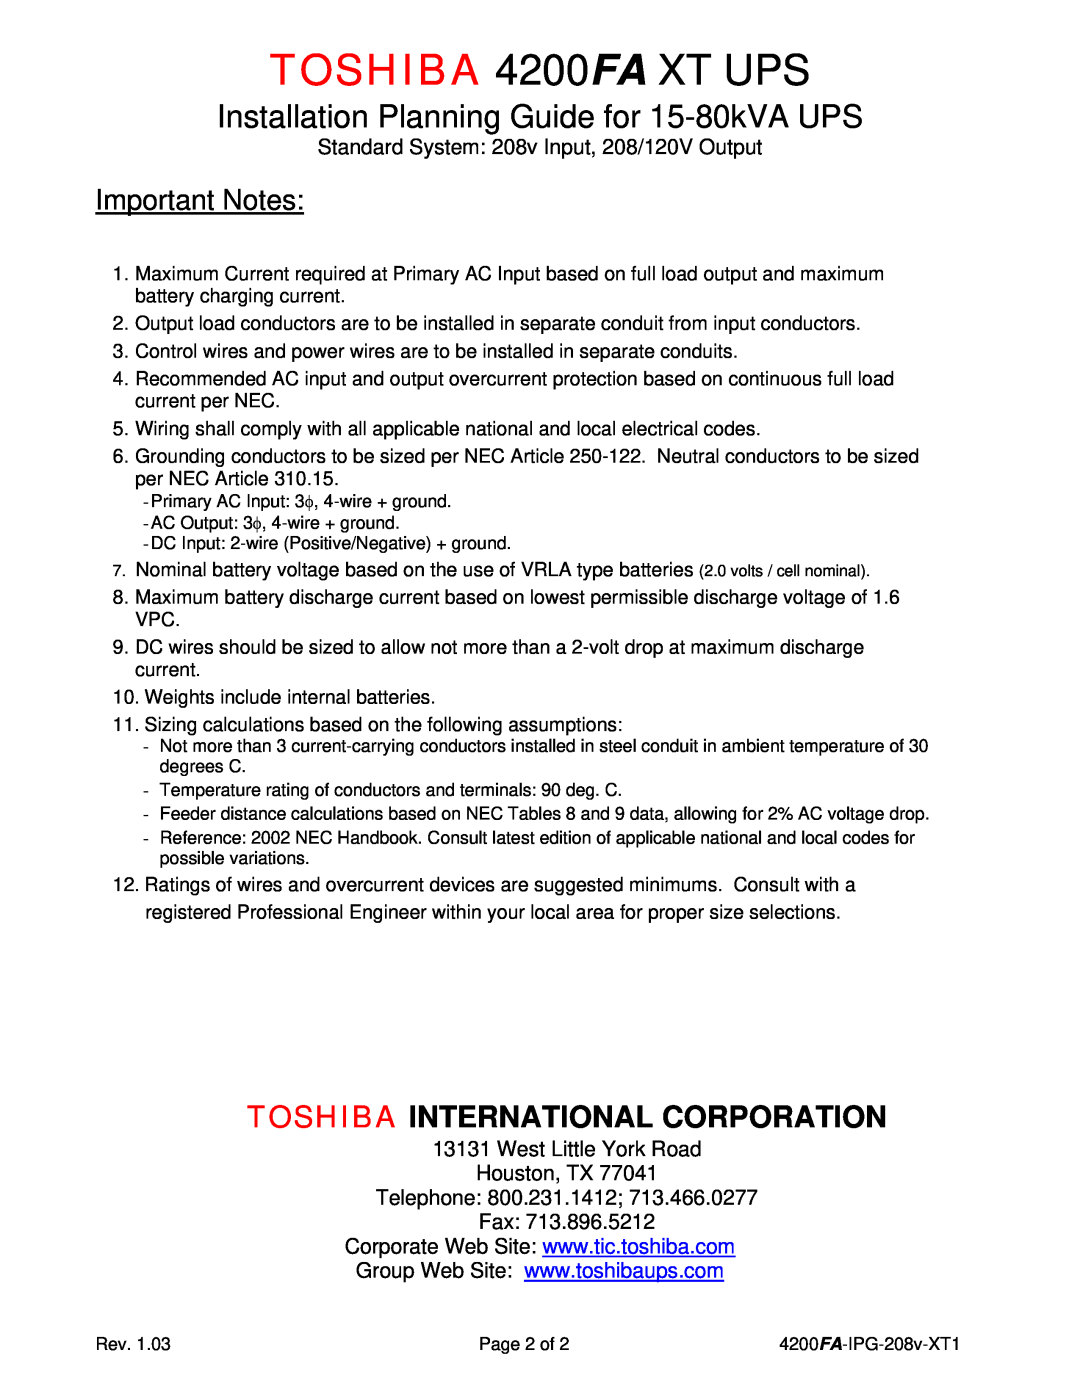 Toshiba dimensions West Little York Road Houston, TX Telephone 800.231.1412, TOSHIBA 4200FA XT UPS, Important Notes 